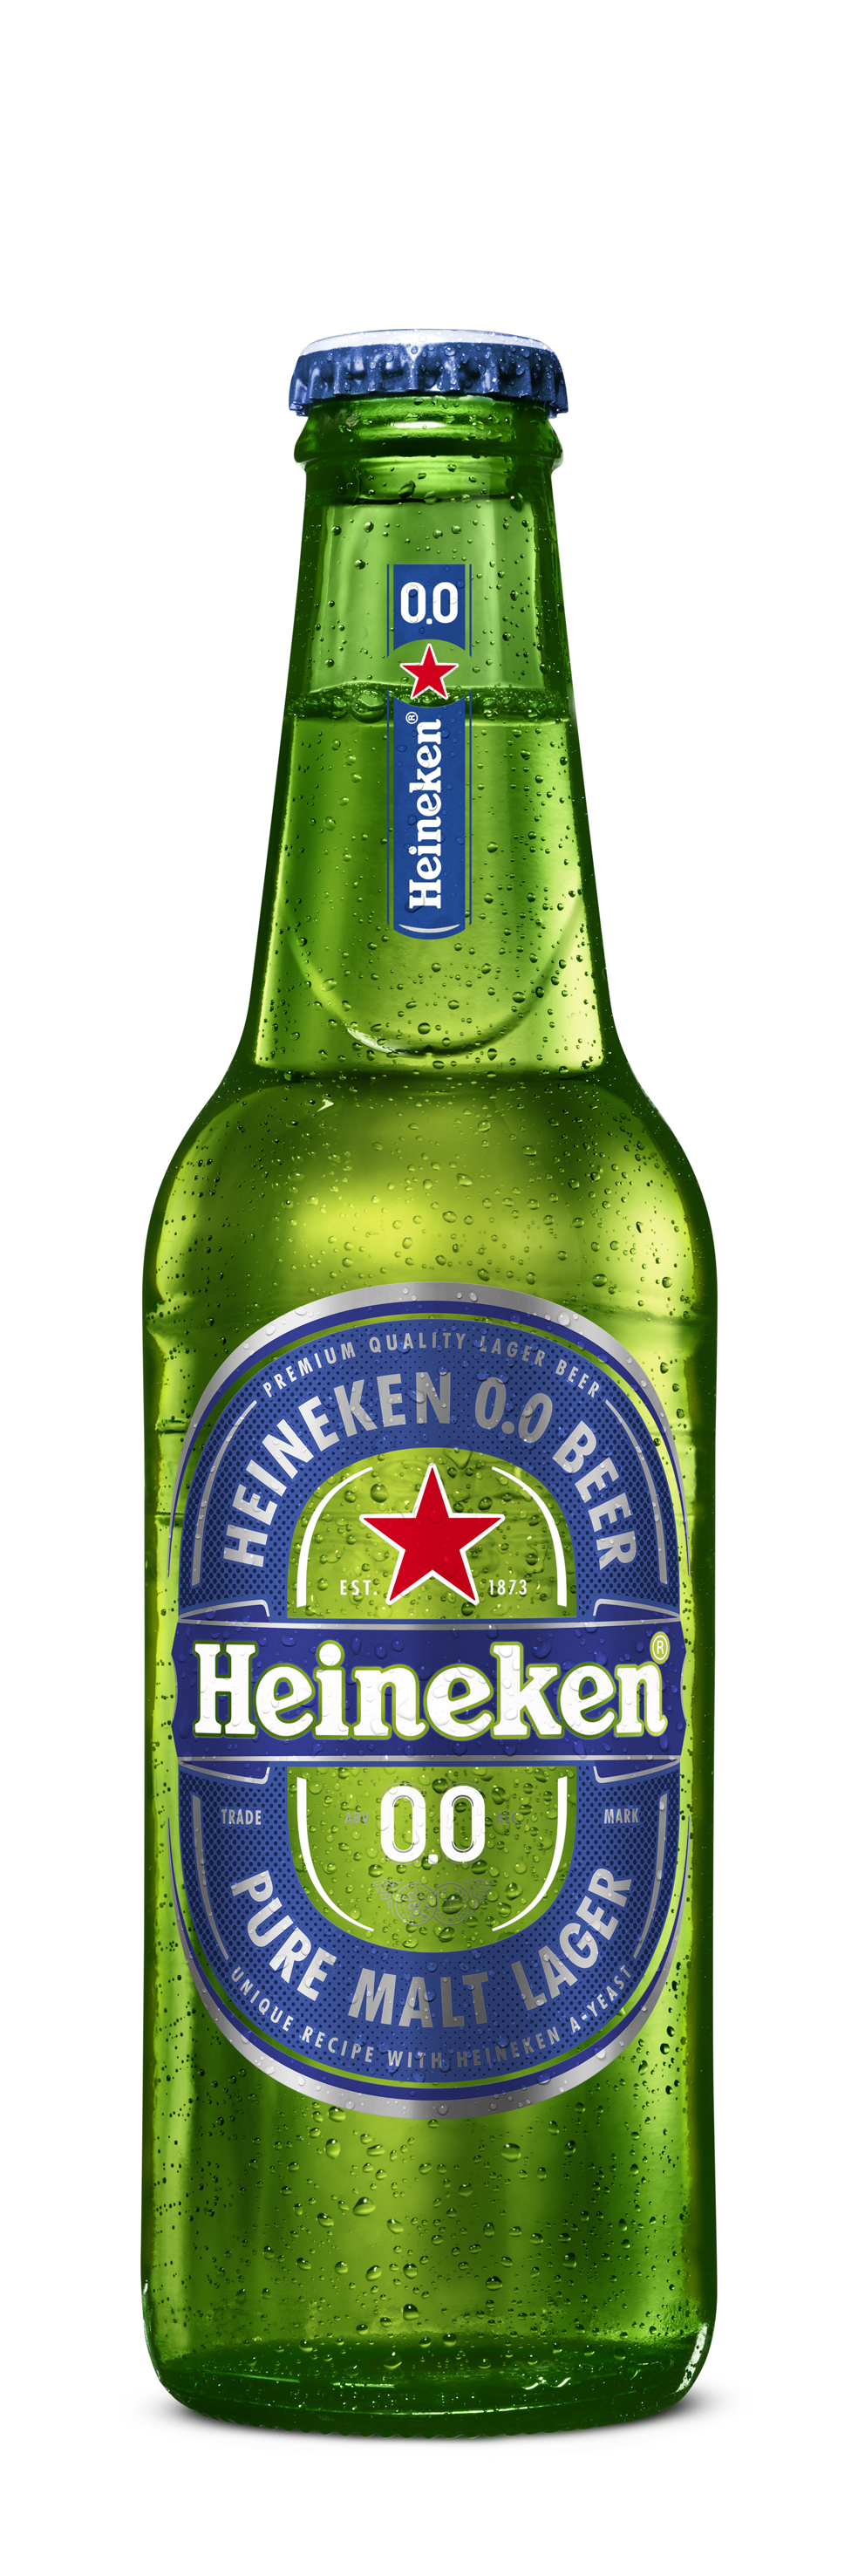 67019 Heineken 0.0% flesjes 24x30 cl